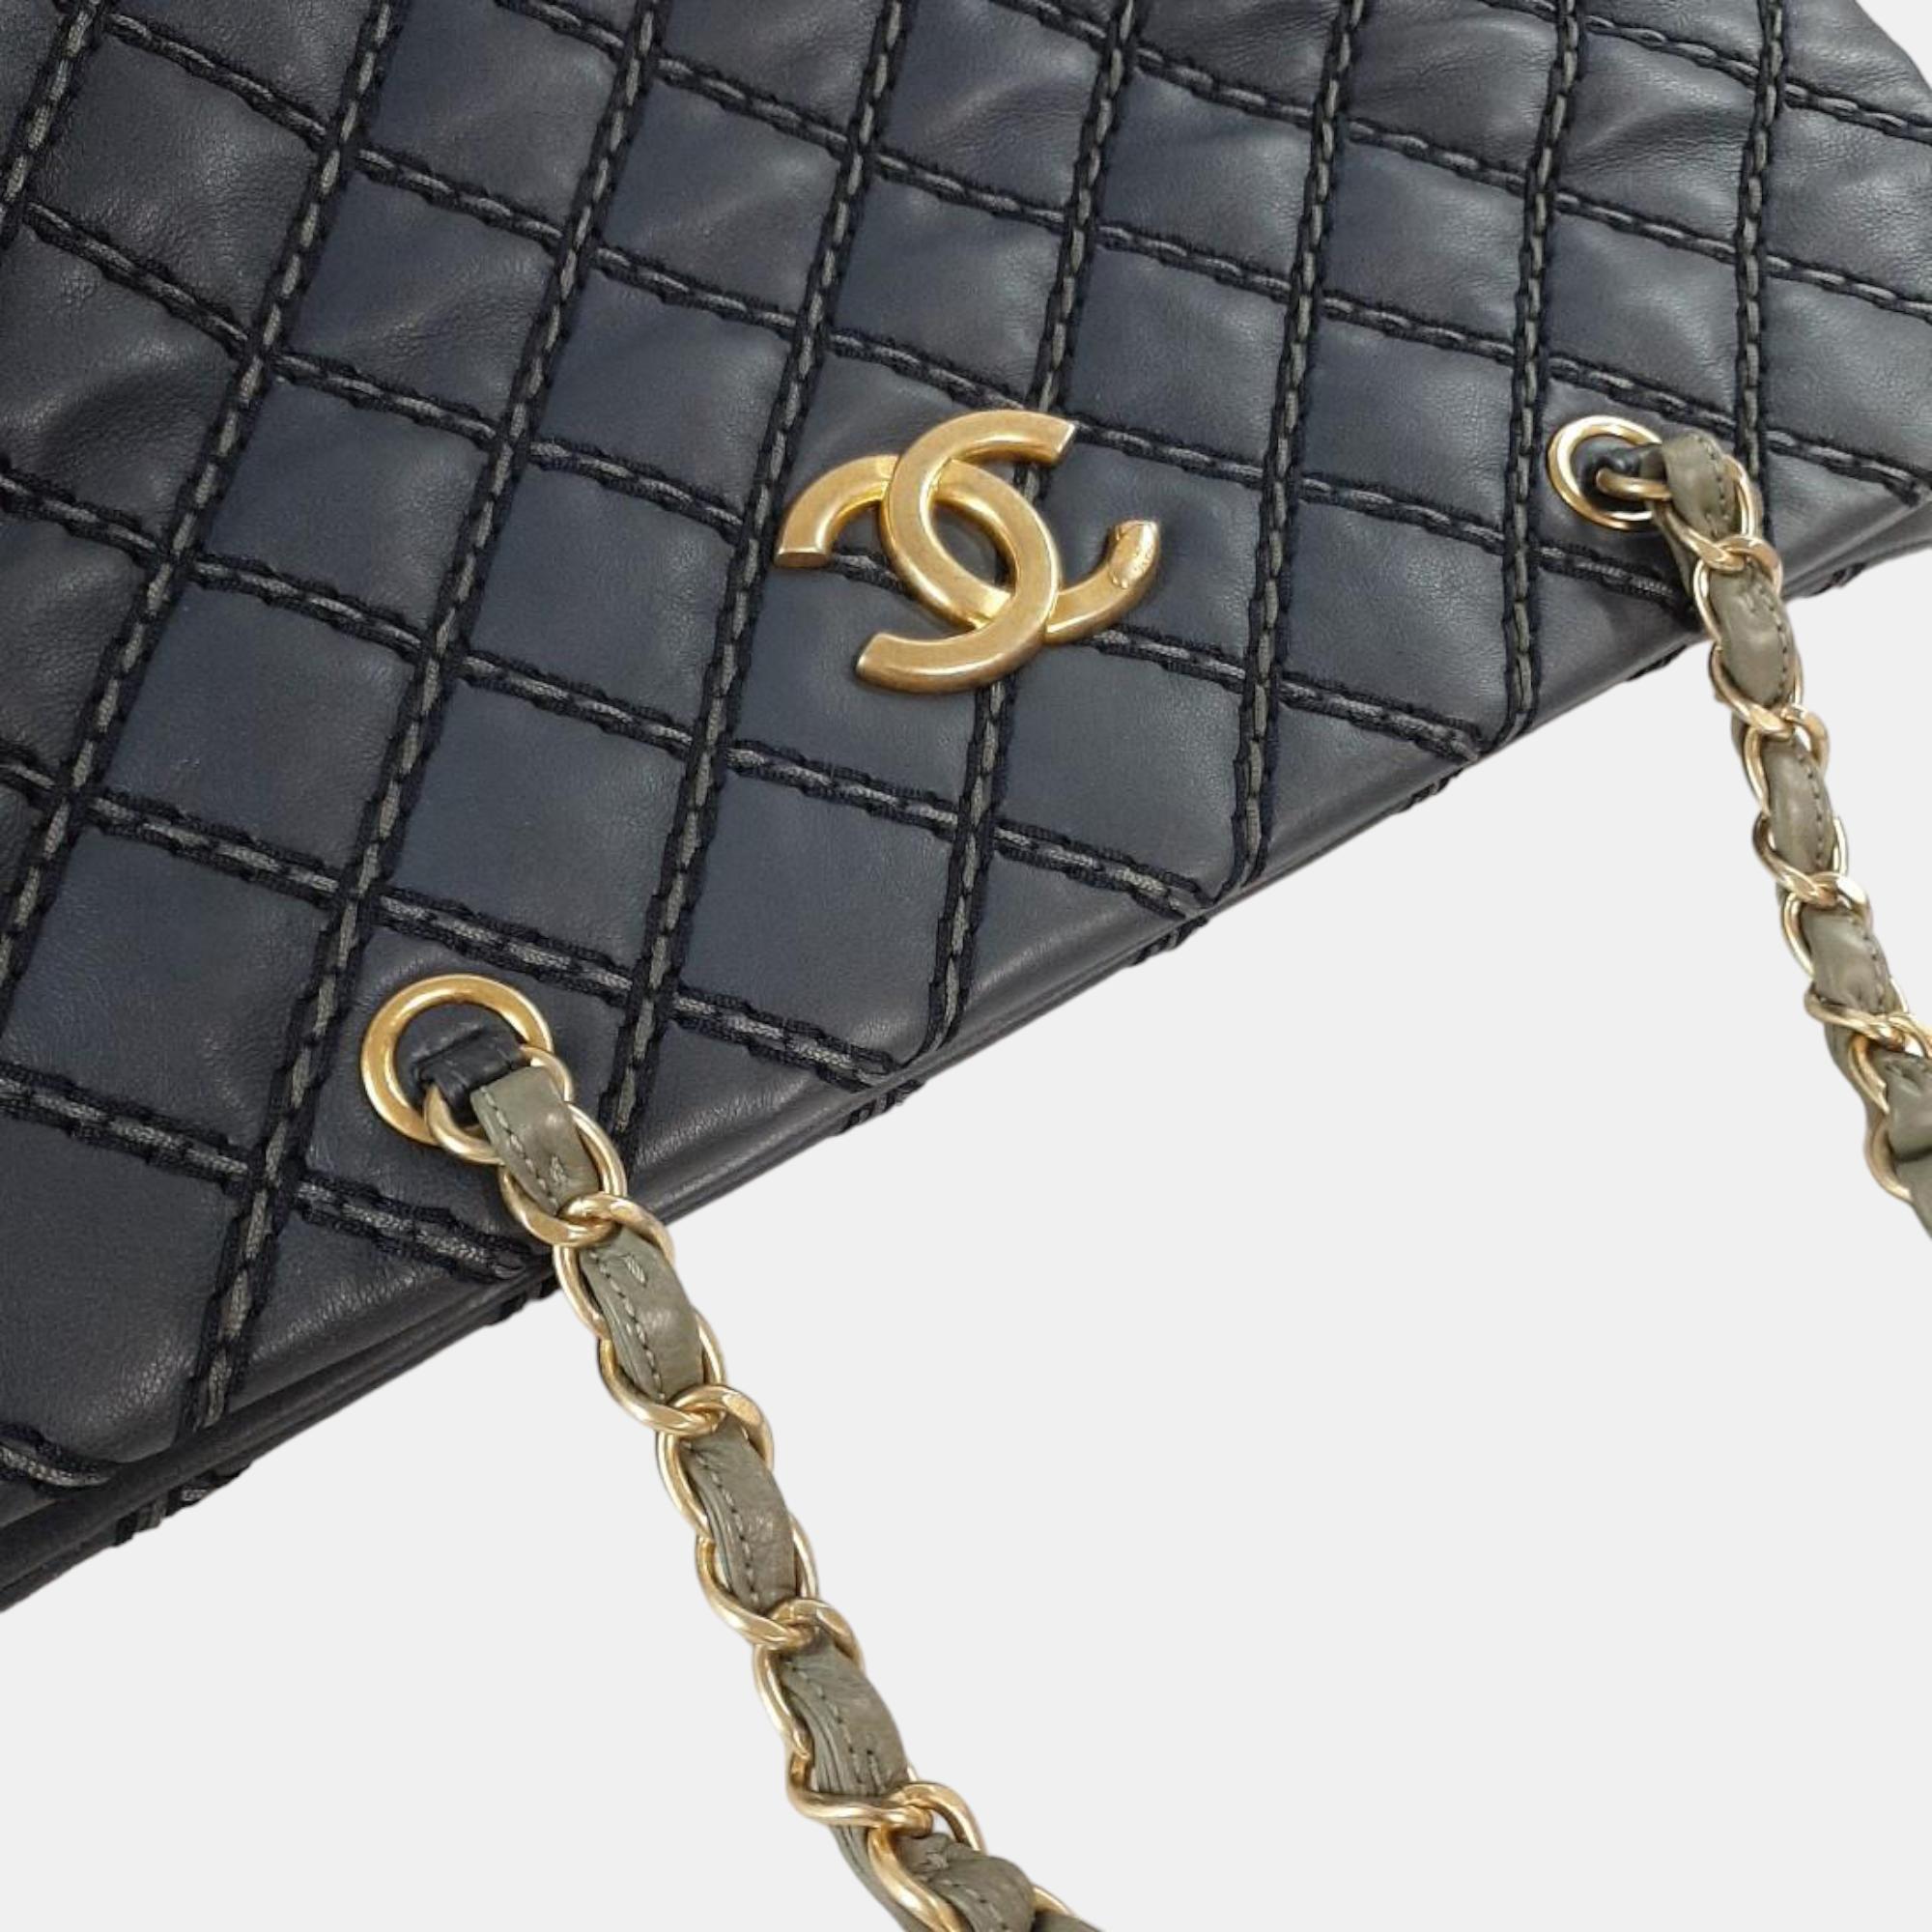 Chanel Blue Leather Wild Stitch Chain Tote Bag